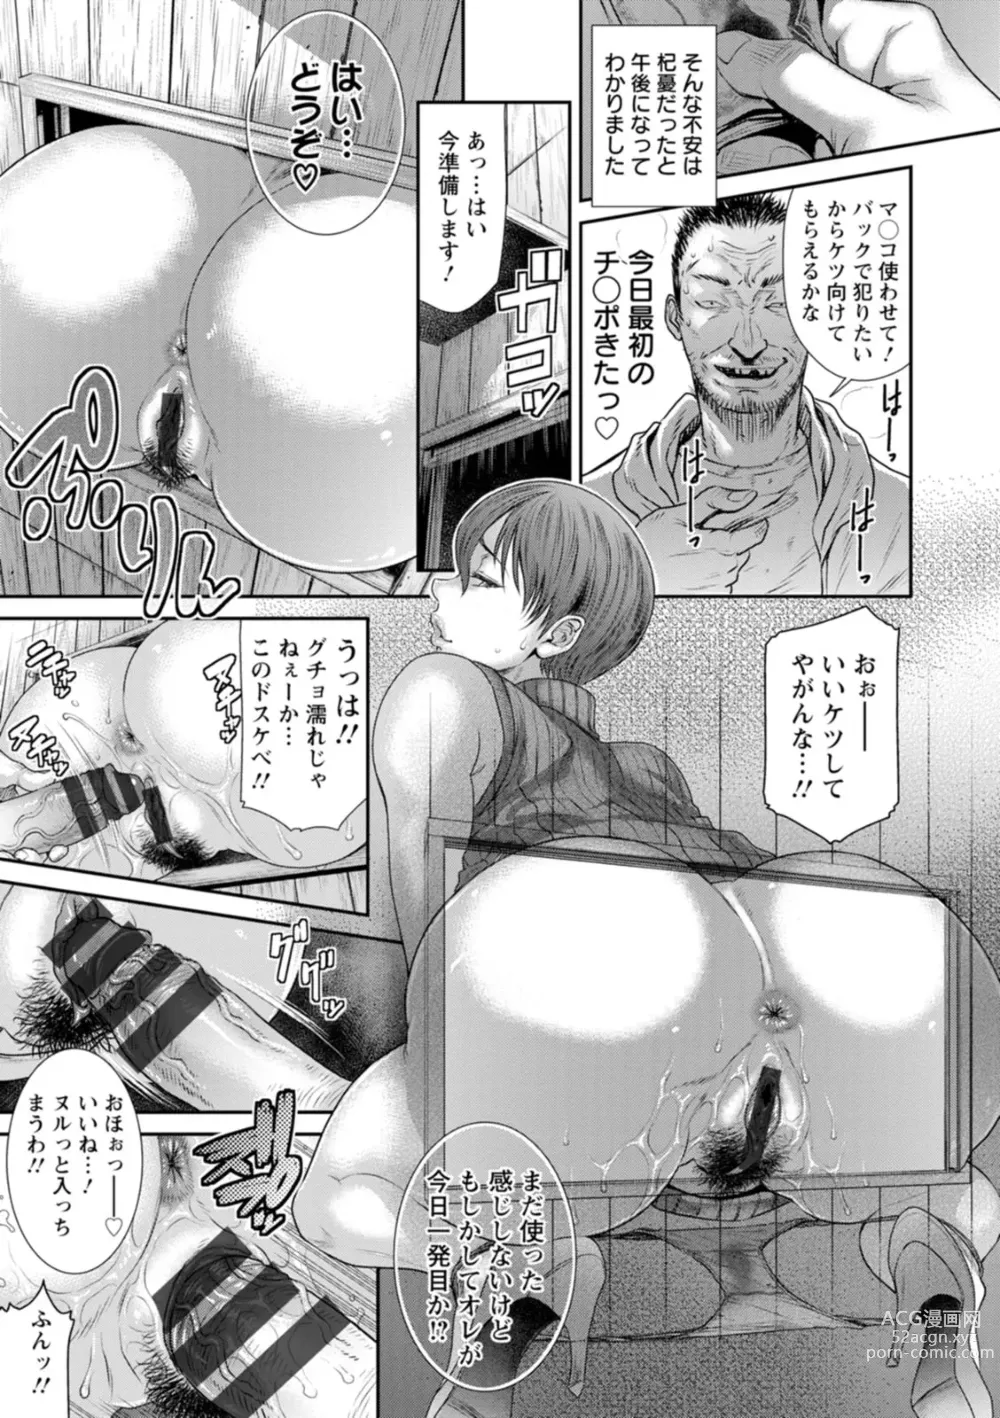 Page 19 of manga Obscene Box